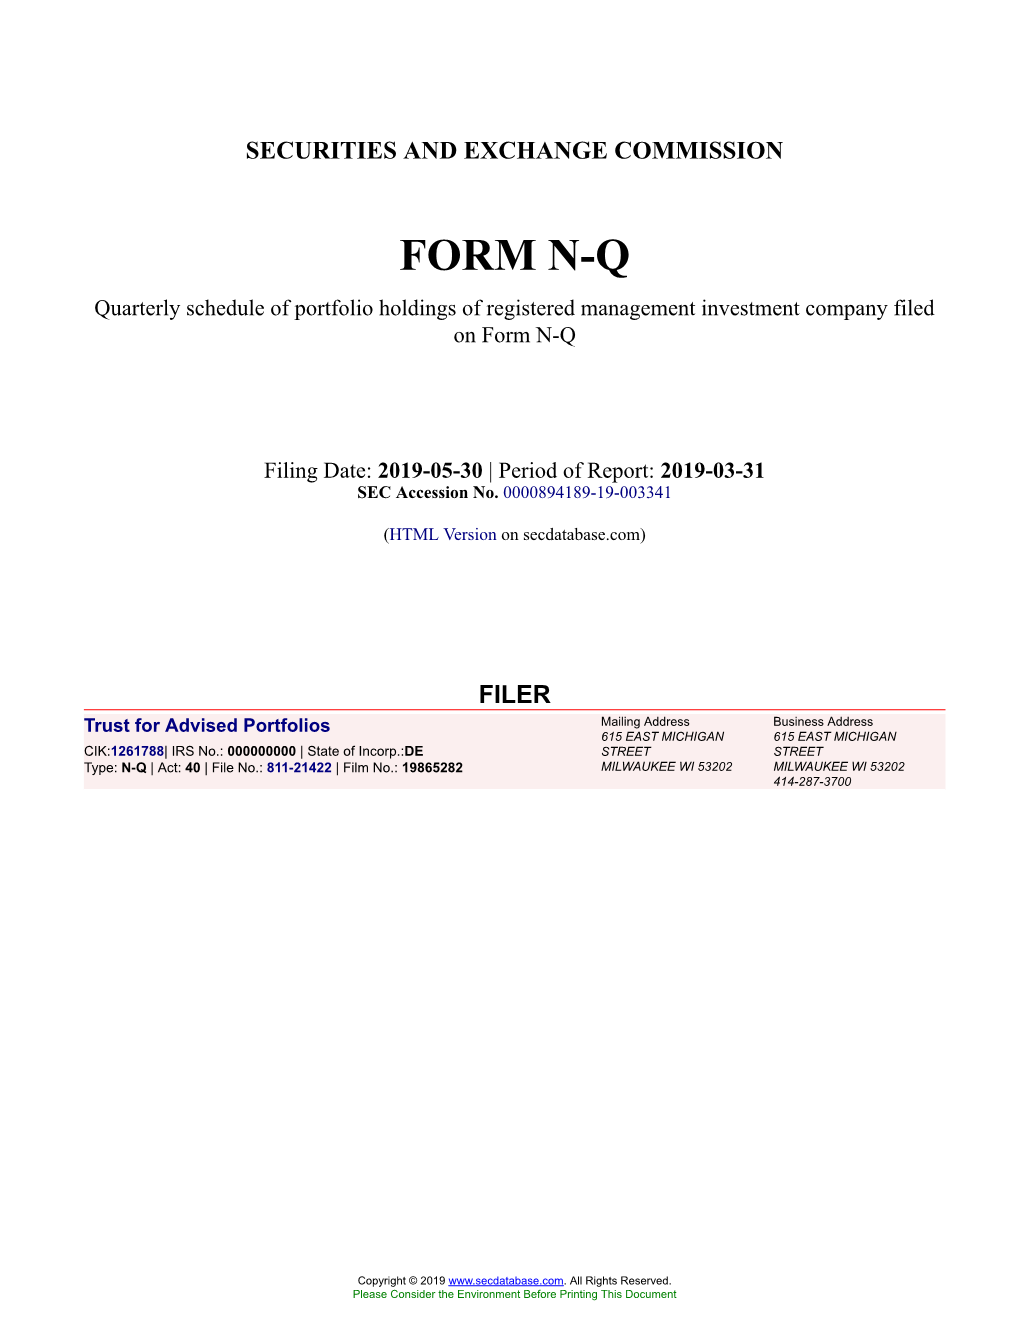 Trust for Advised Portfolios Form N-Q Filed 2019-05-30